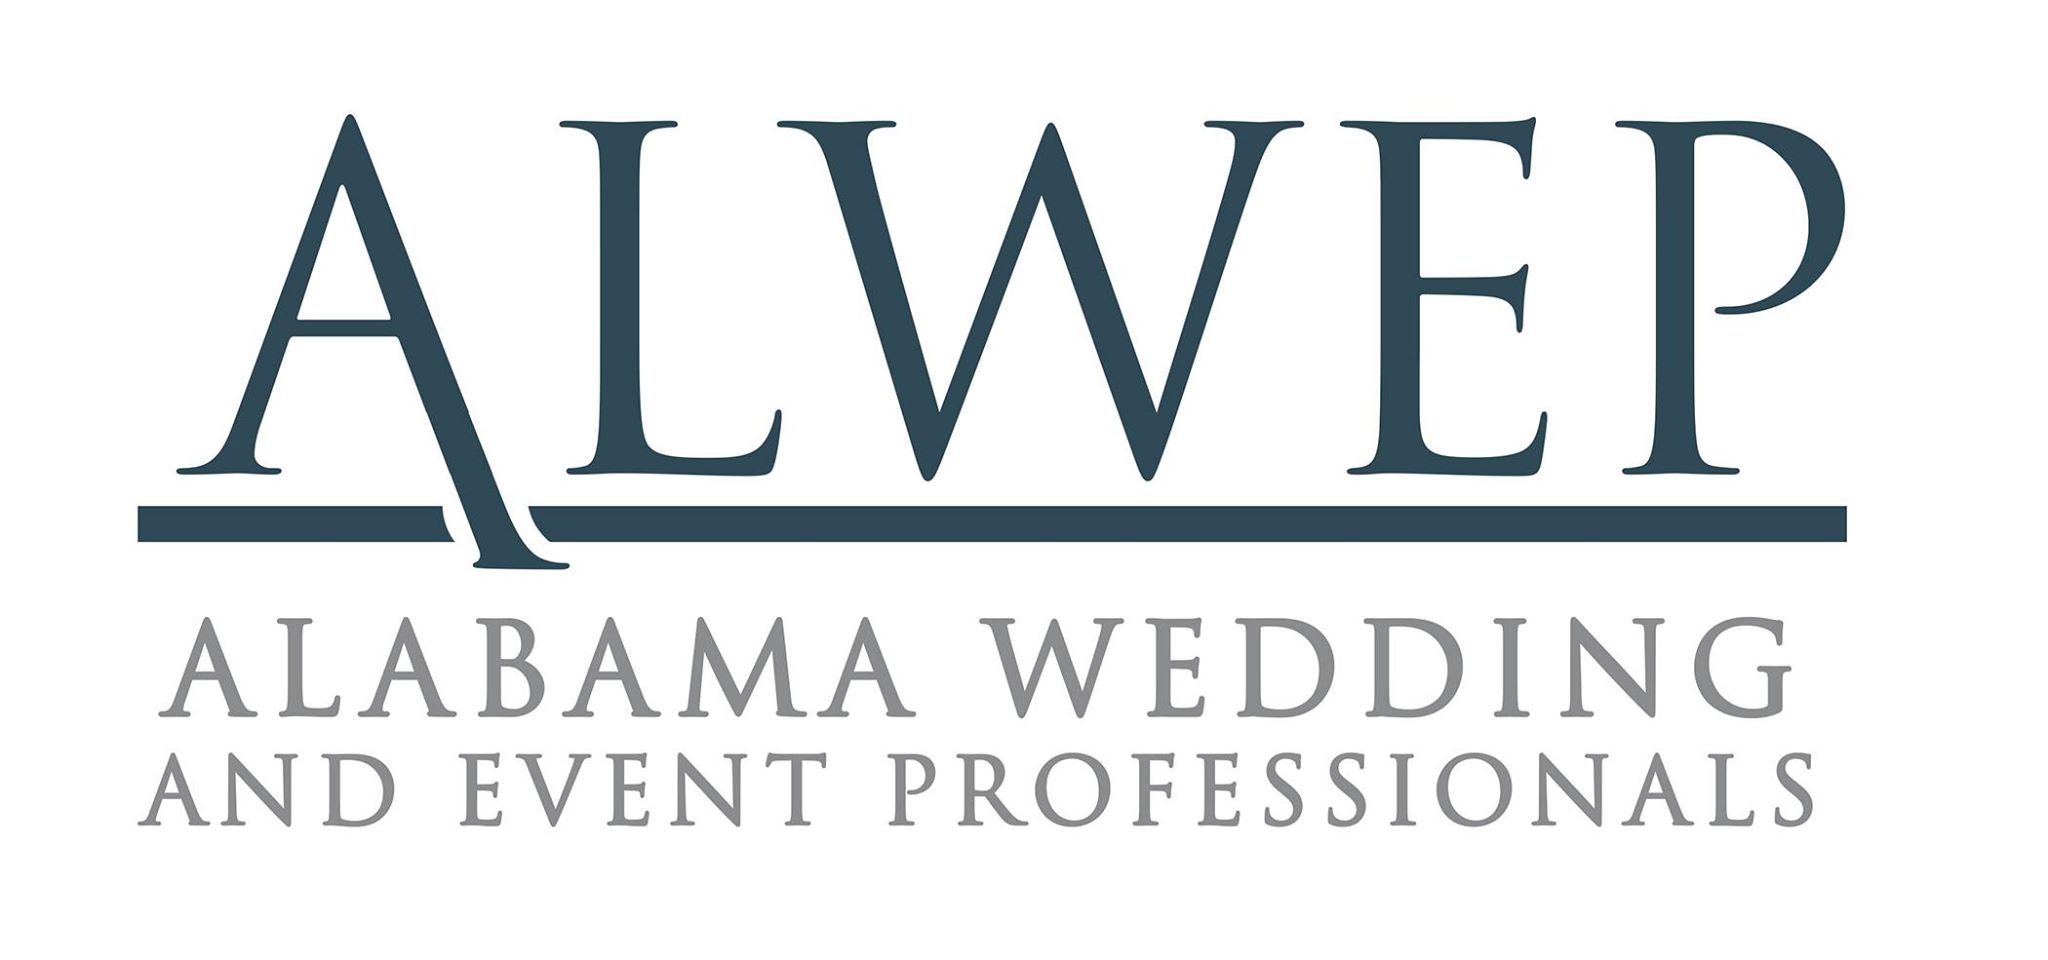 Alabama Wedding and Event Professionals logo